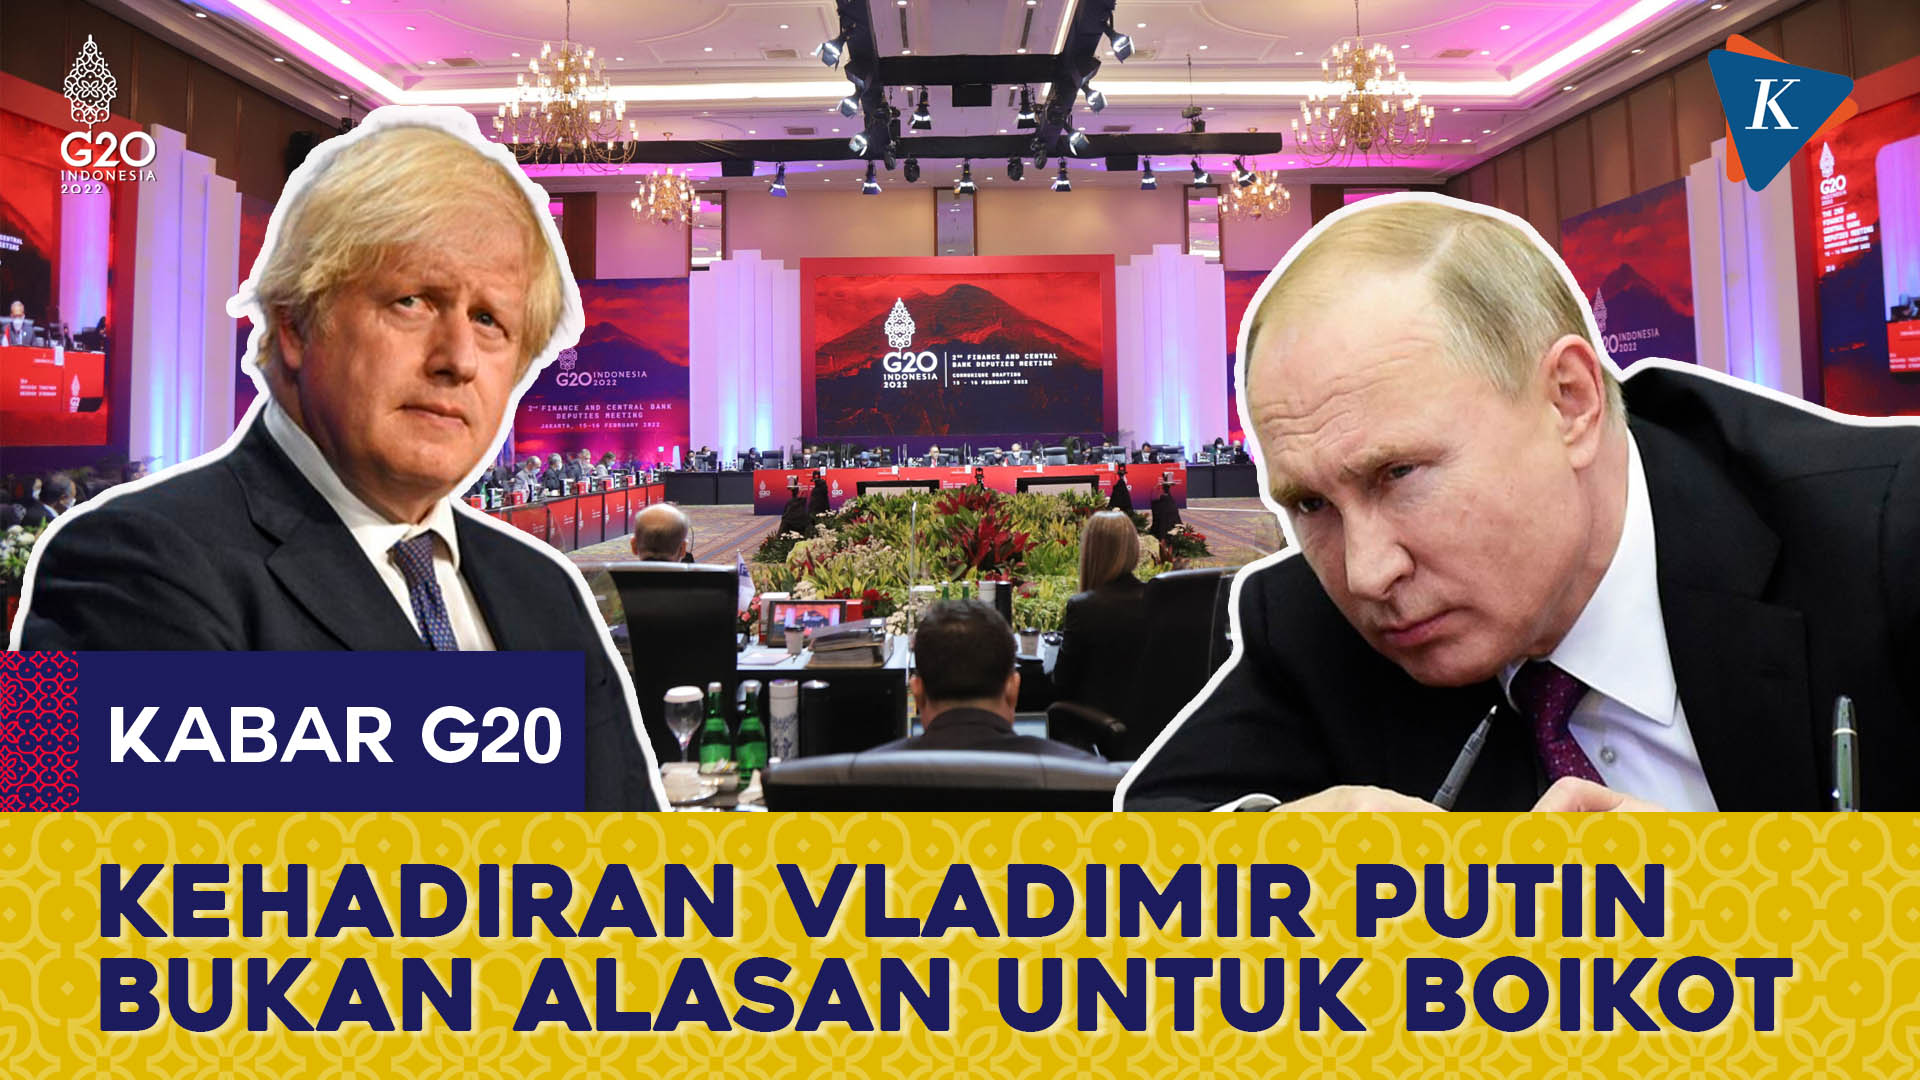 PM Inggris Desak Negara-negara Jangan Boikot KTT G20 di Indonesia meski Ada Putin